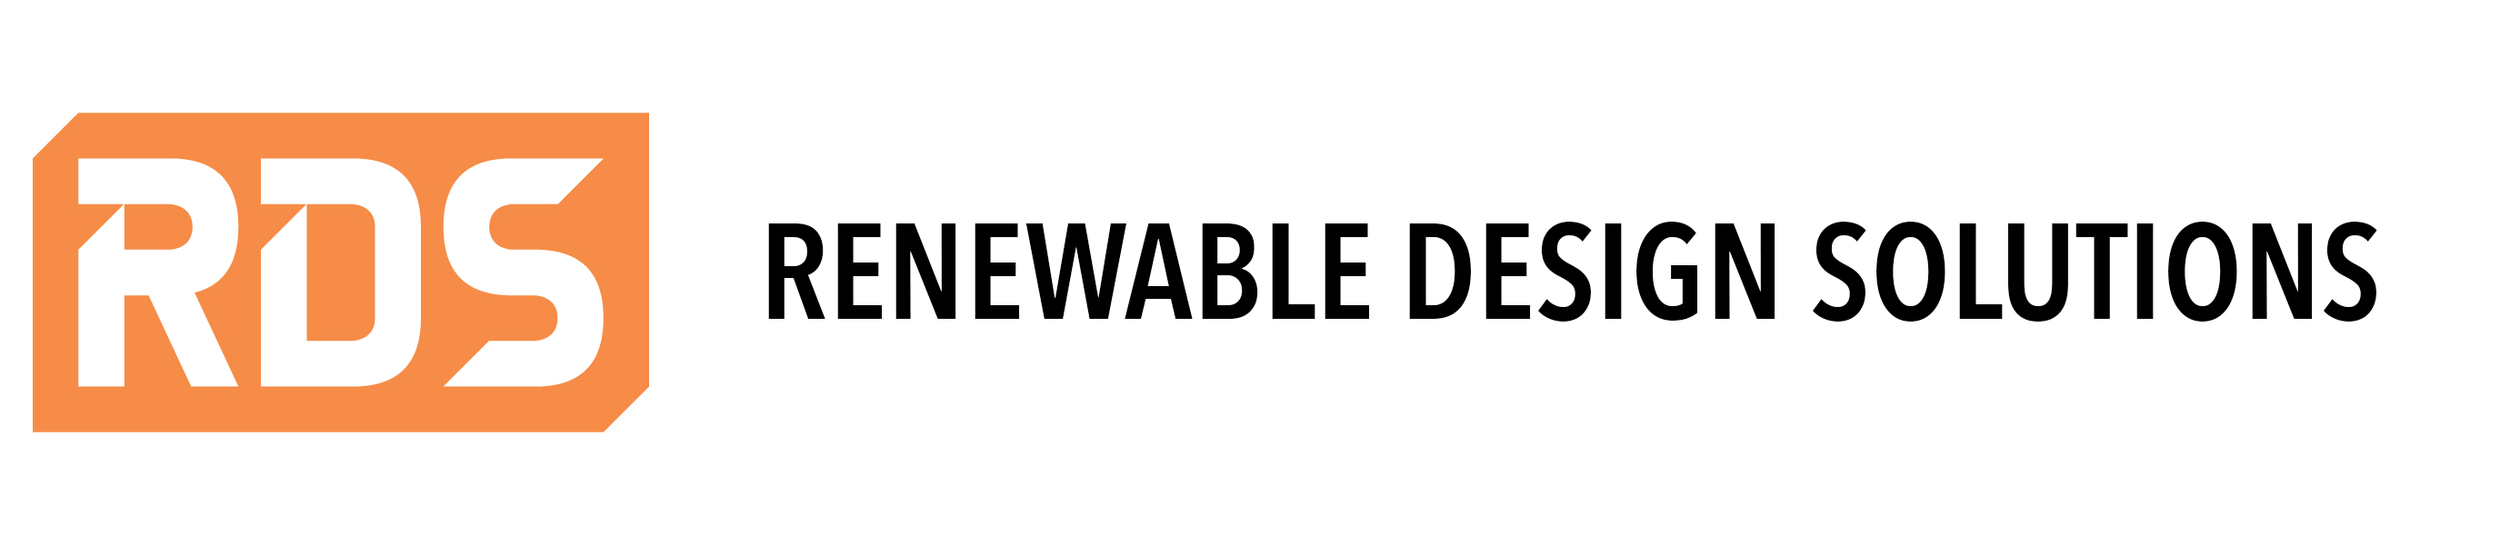 Renewable Design Solutions